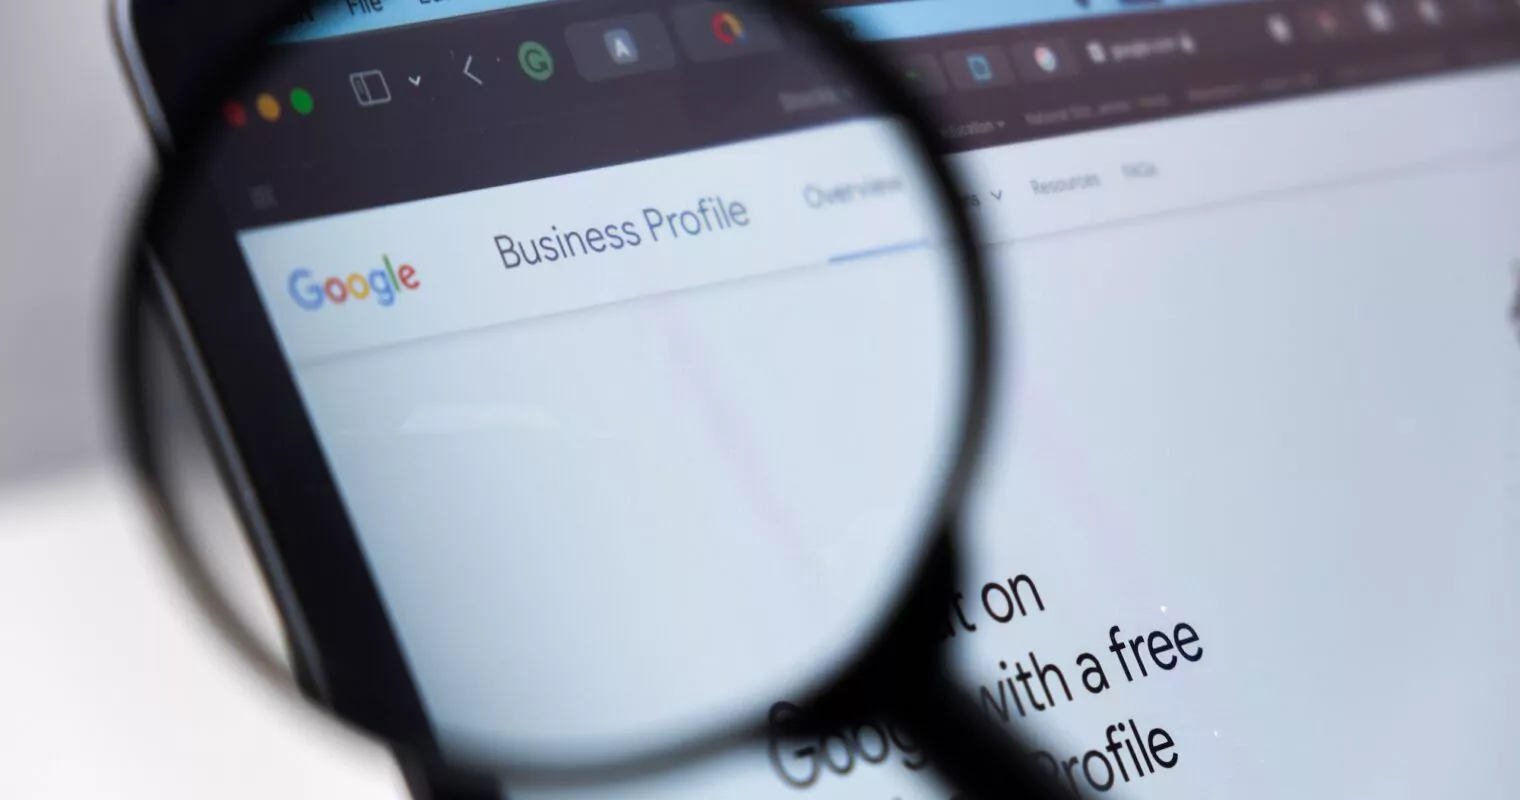 Google Business Profile Websites : Adnivate